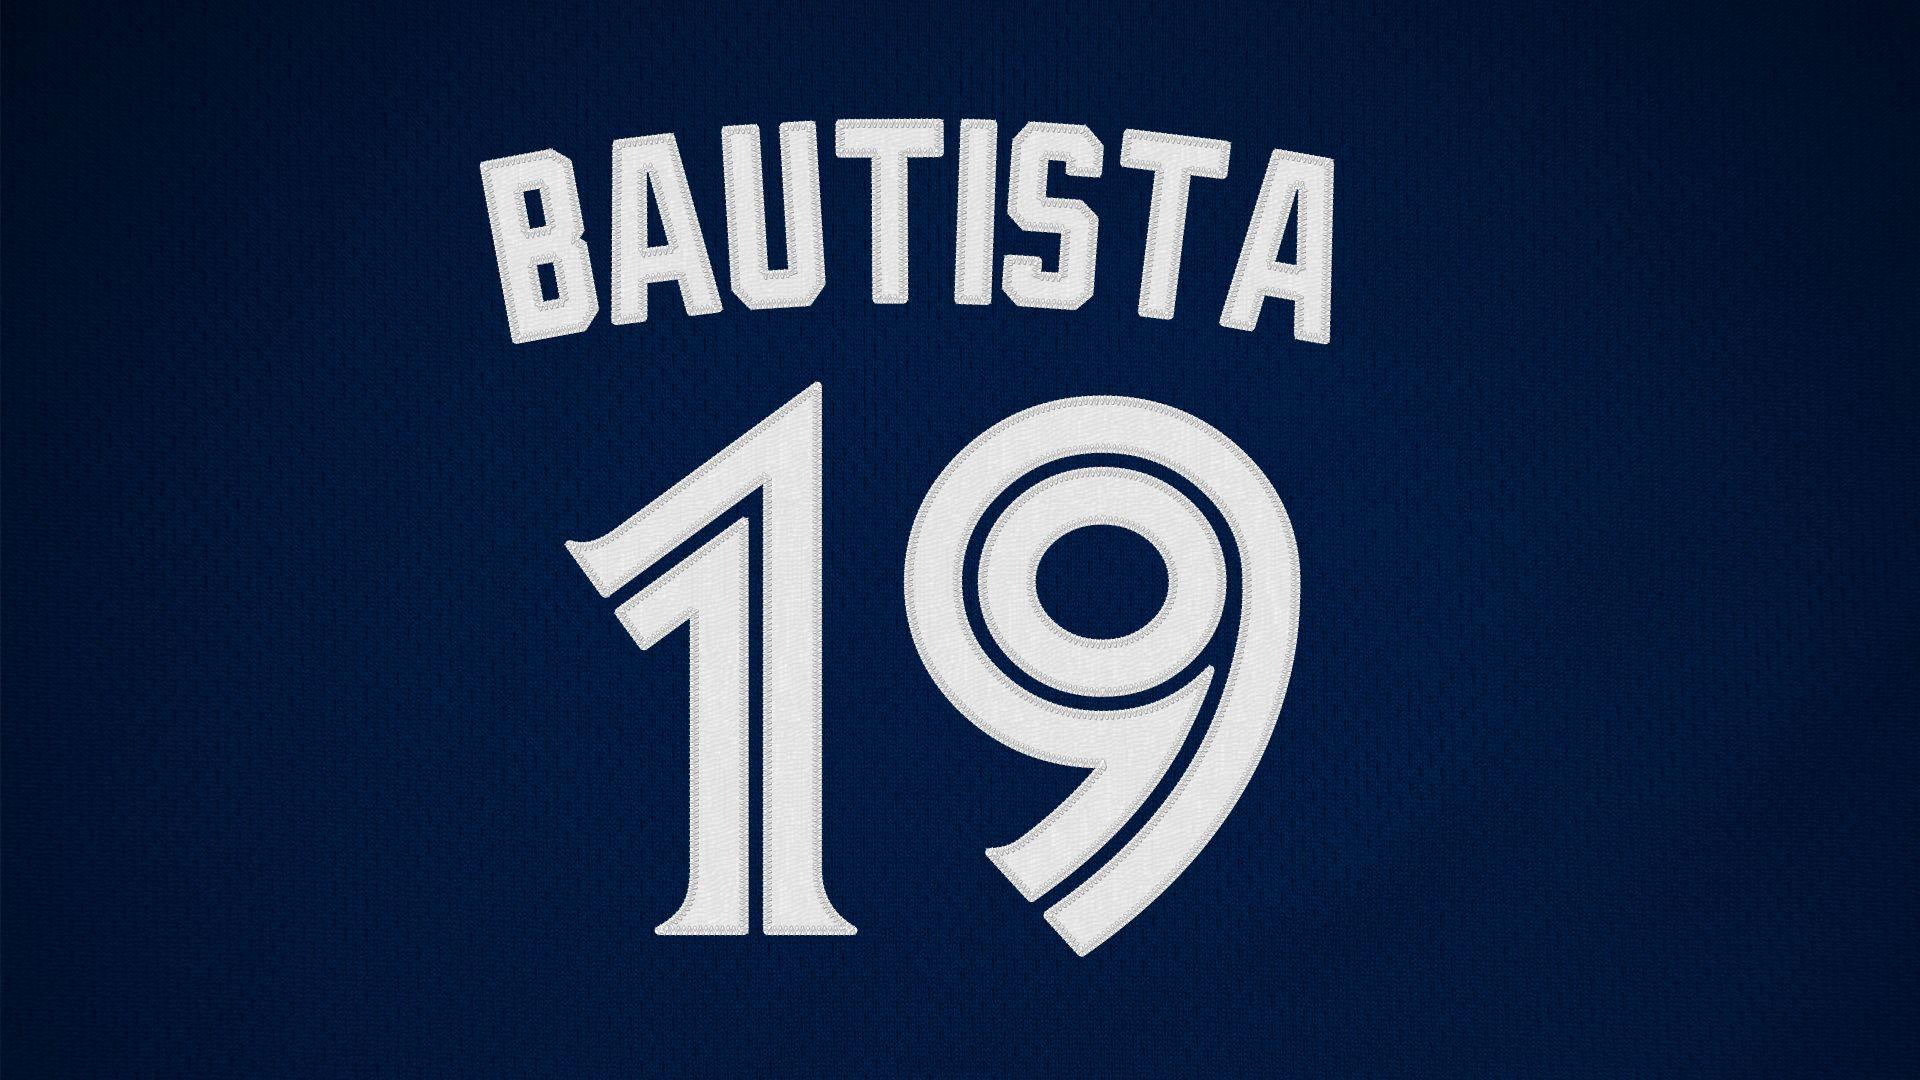 Toronto Blue Jays image Toronto Blue Jays Bautista jersey